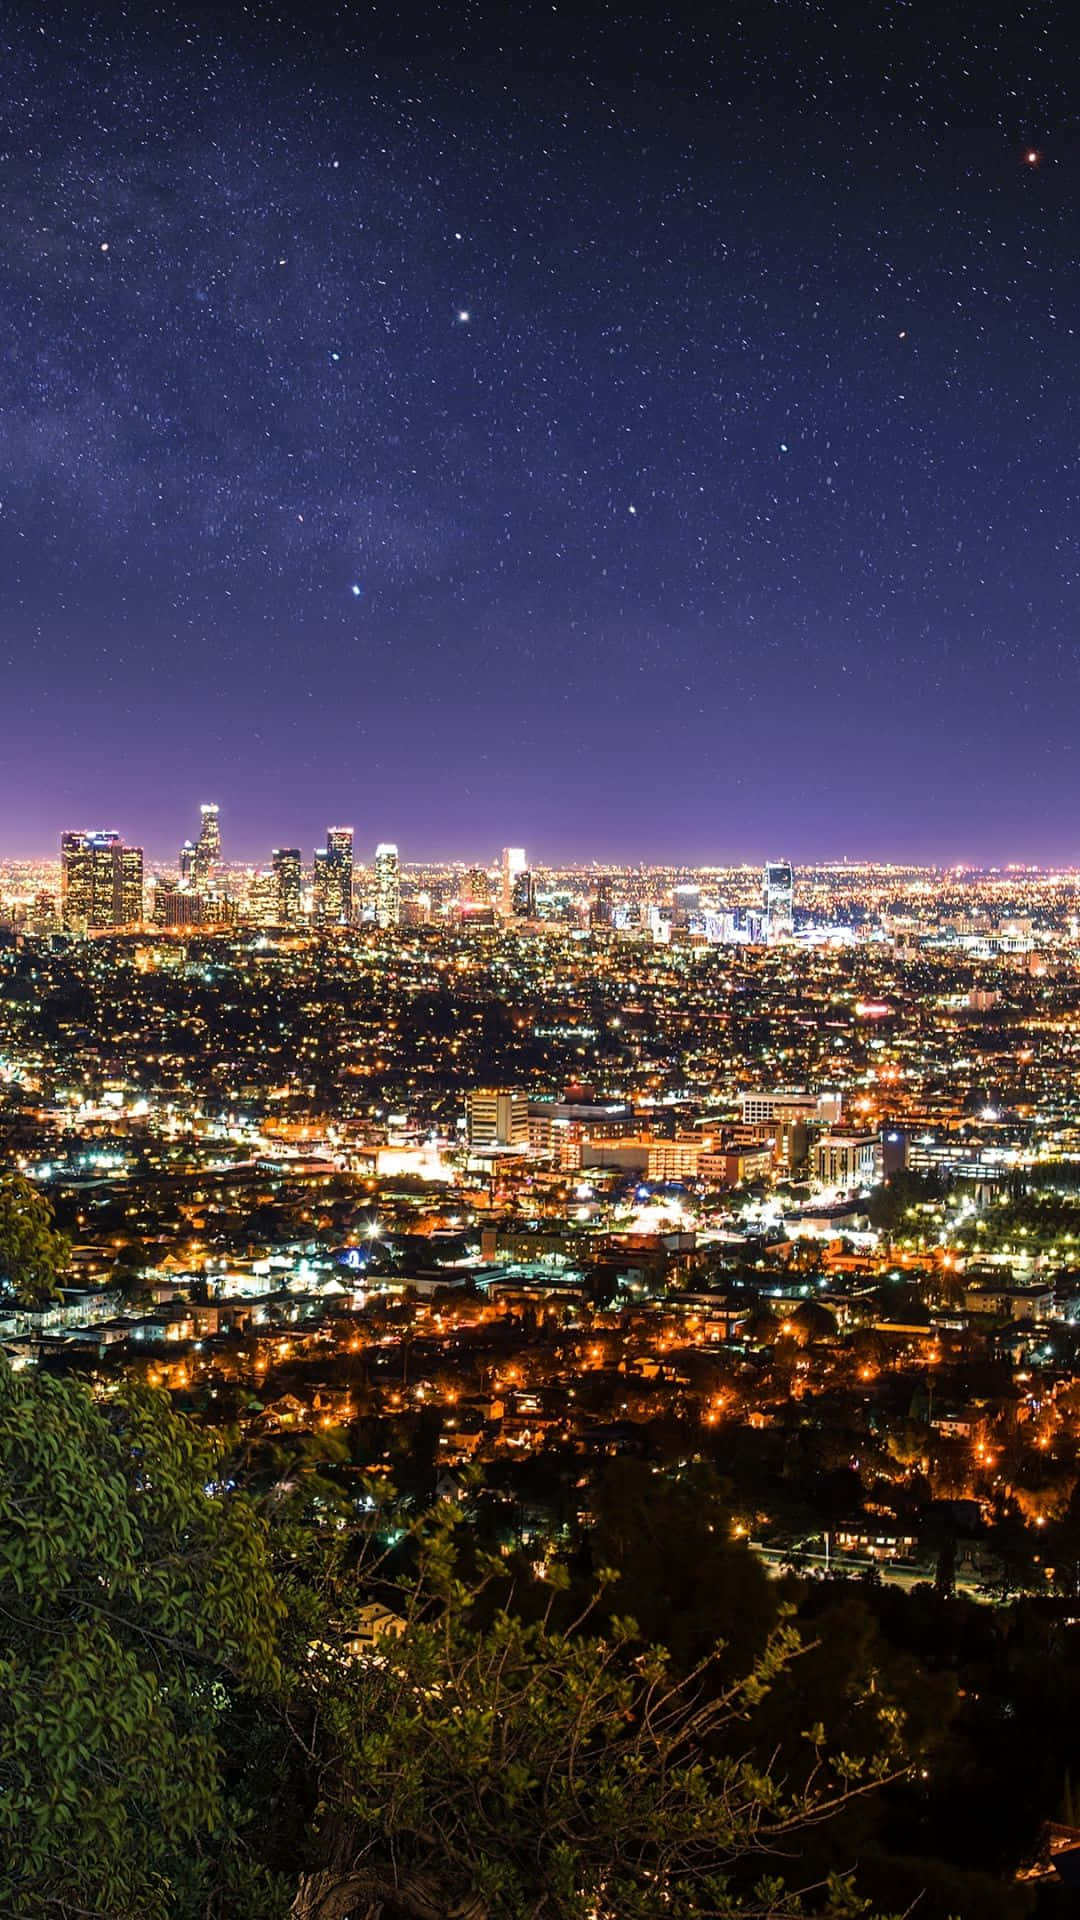 Goditilo Skyline Affascinante Di Los Angeles Dal Comfort Del Tuo Iphone! Sfondo